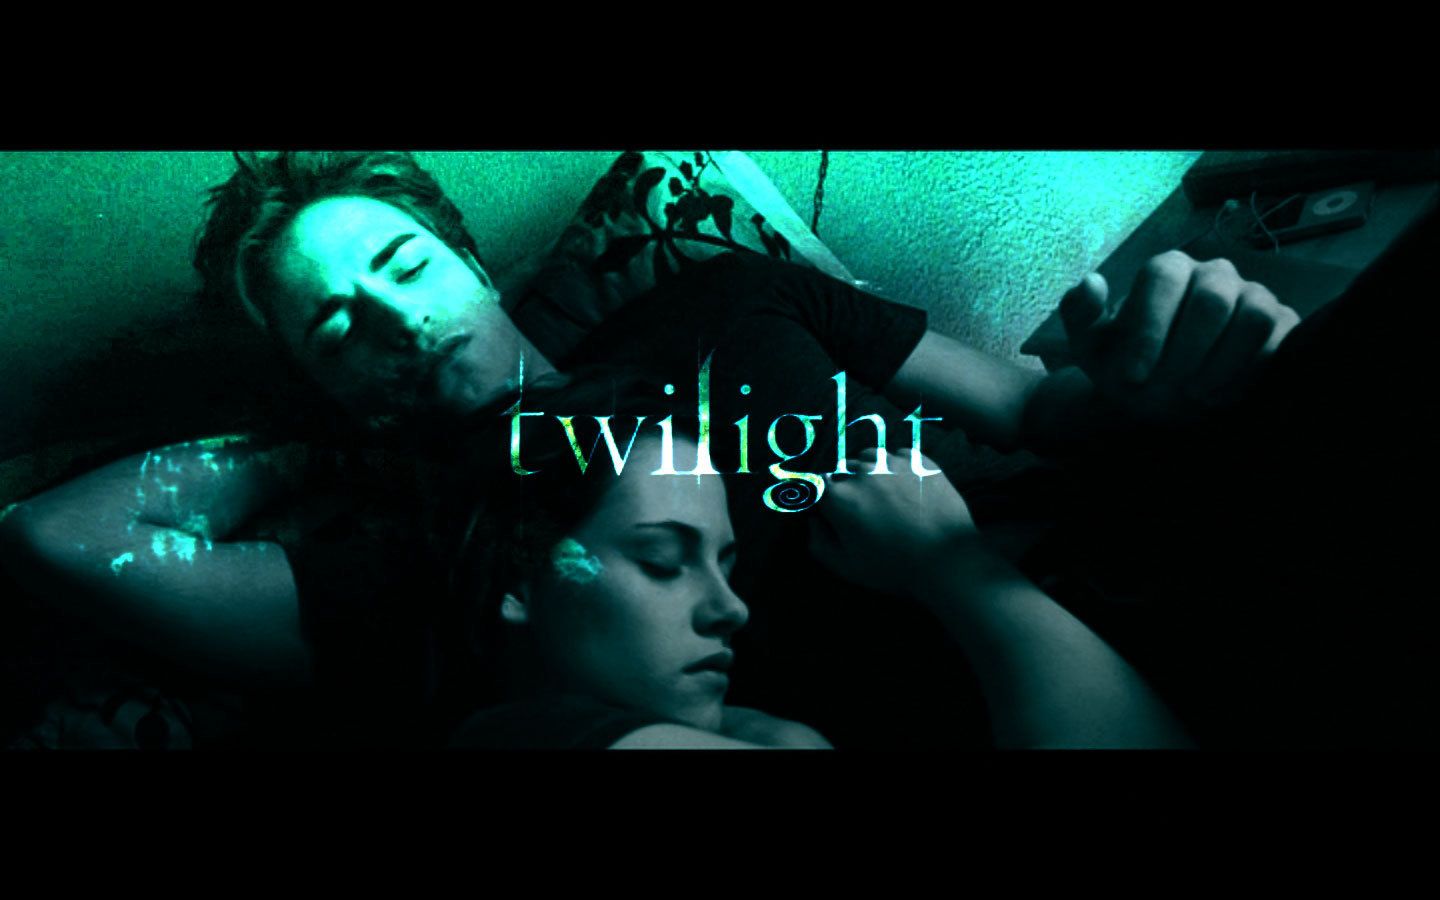 Twilight - Twilight Movie Wallpaper (15538988) - Fanpop